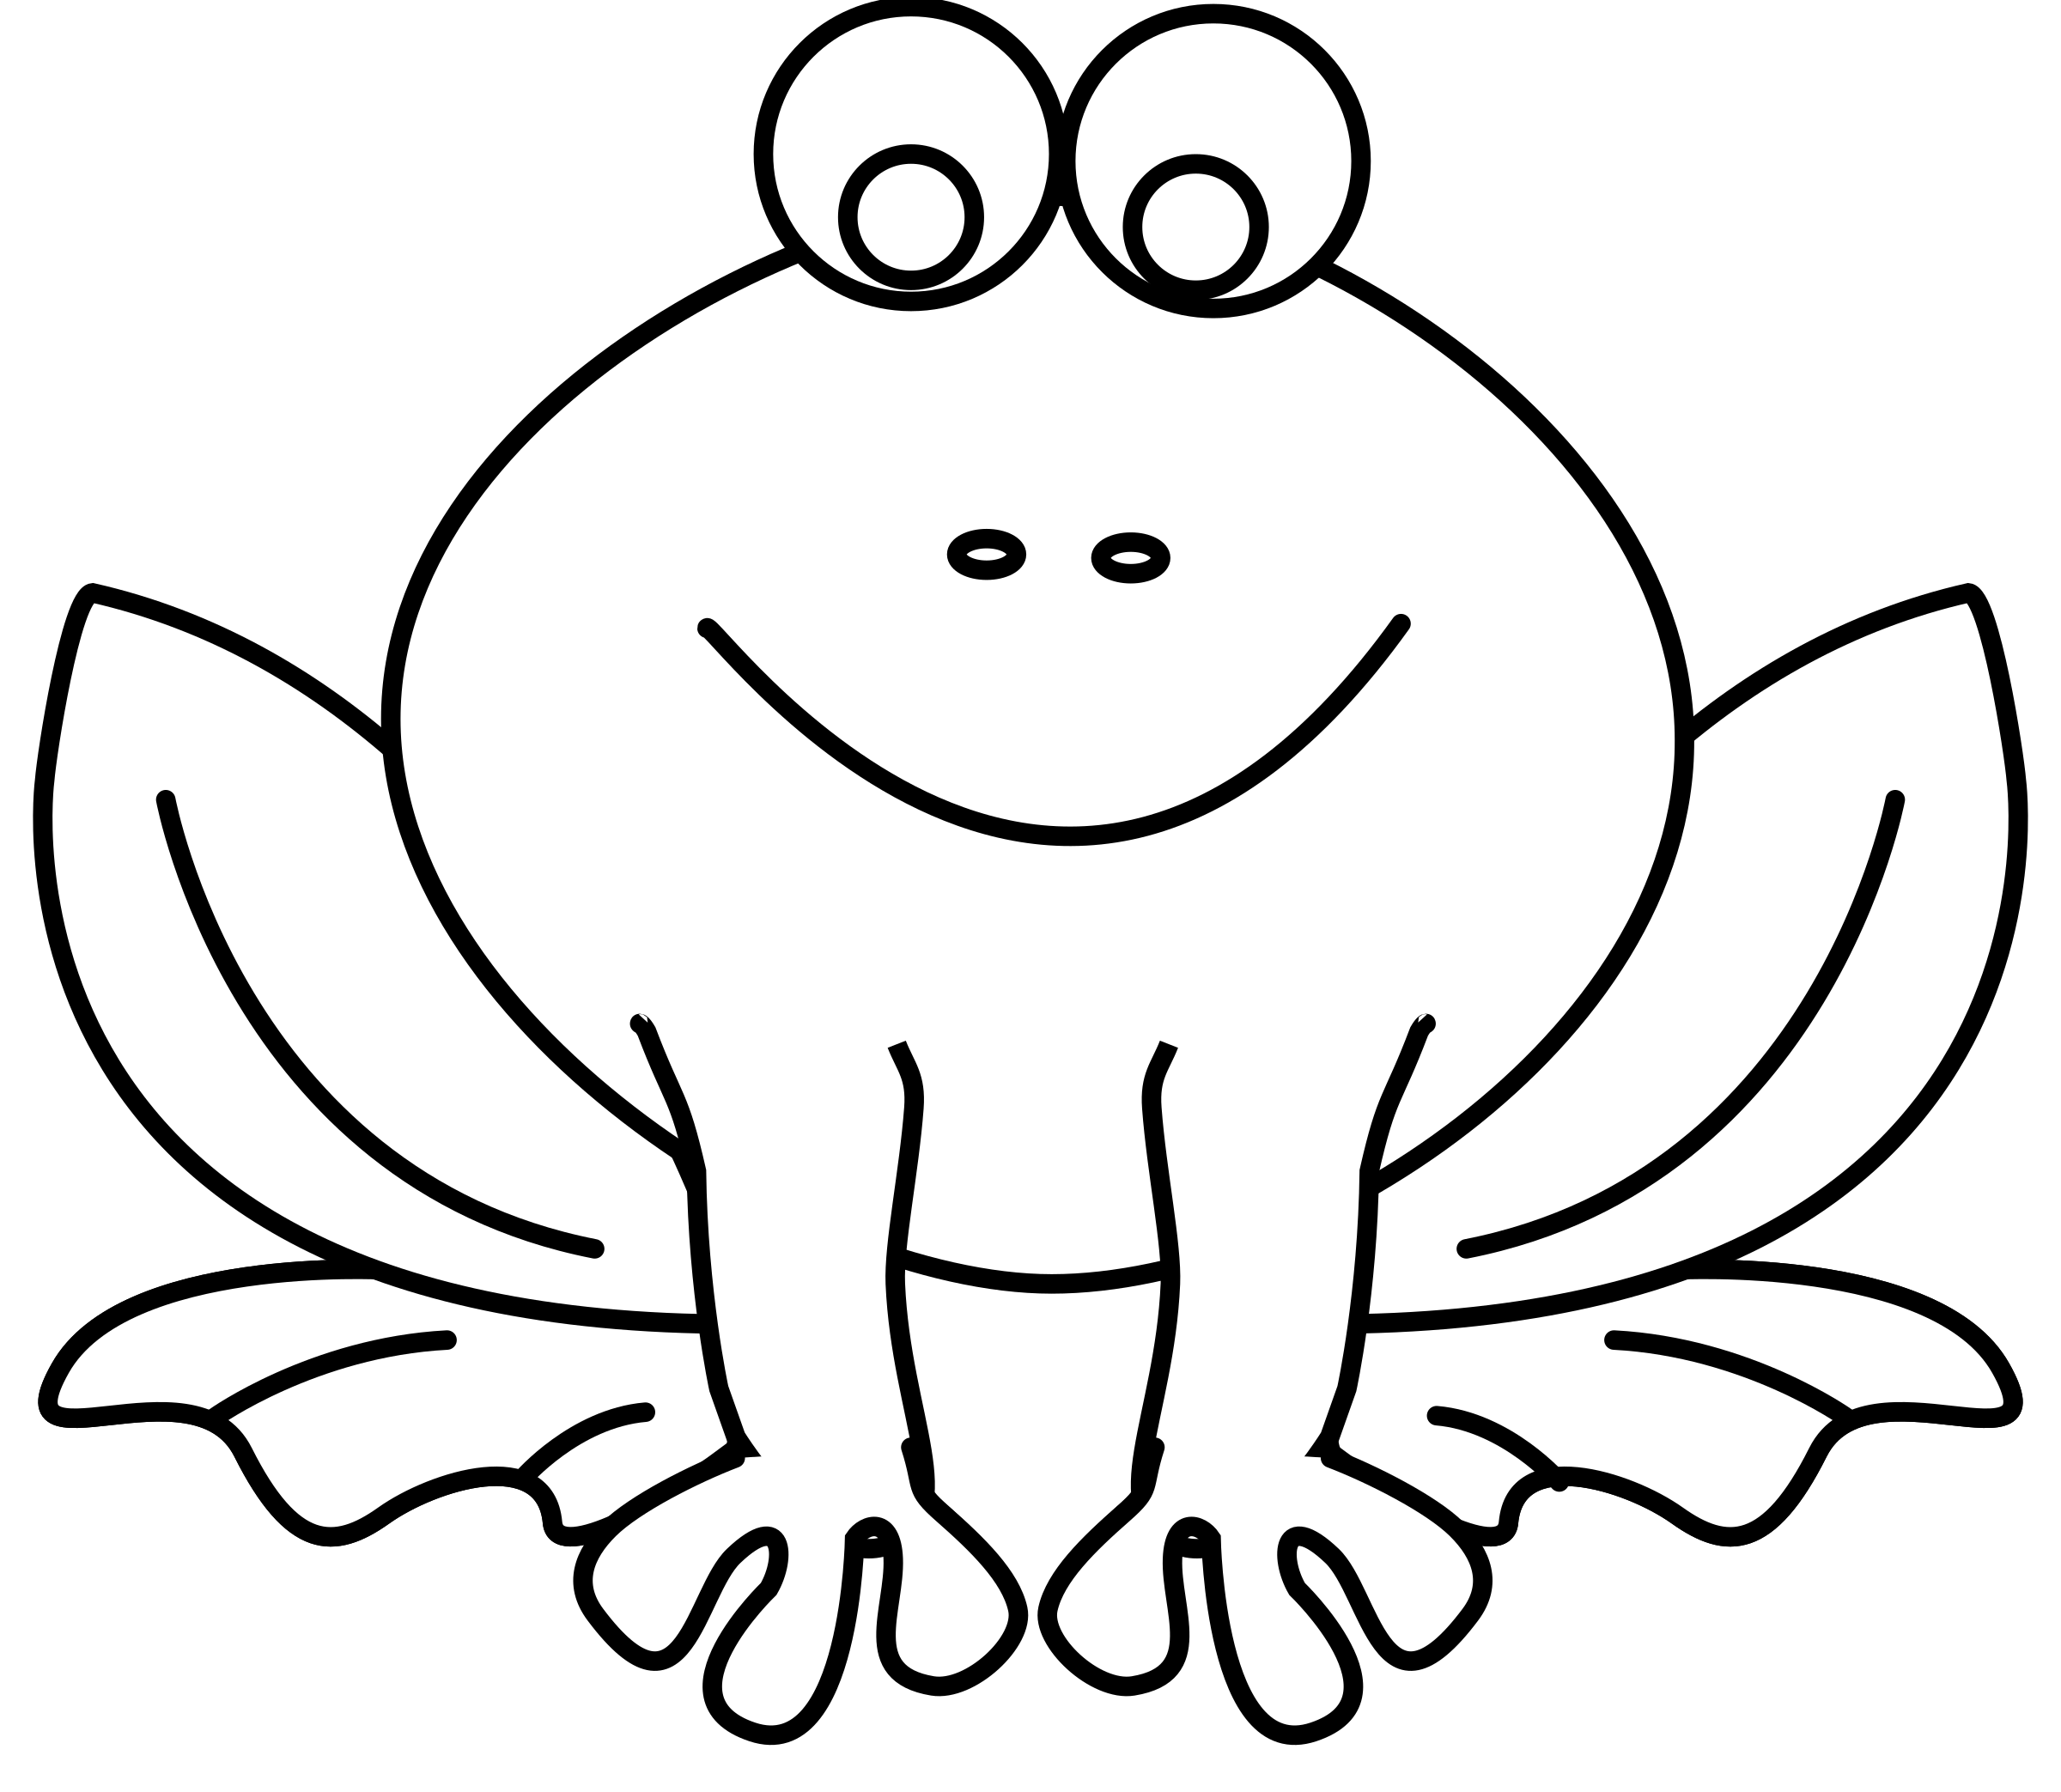 Toad clipart clip art. Frog line big image